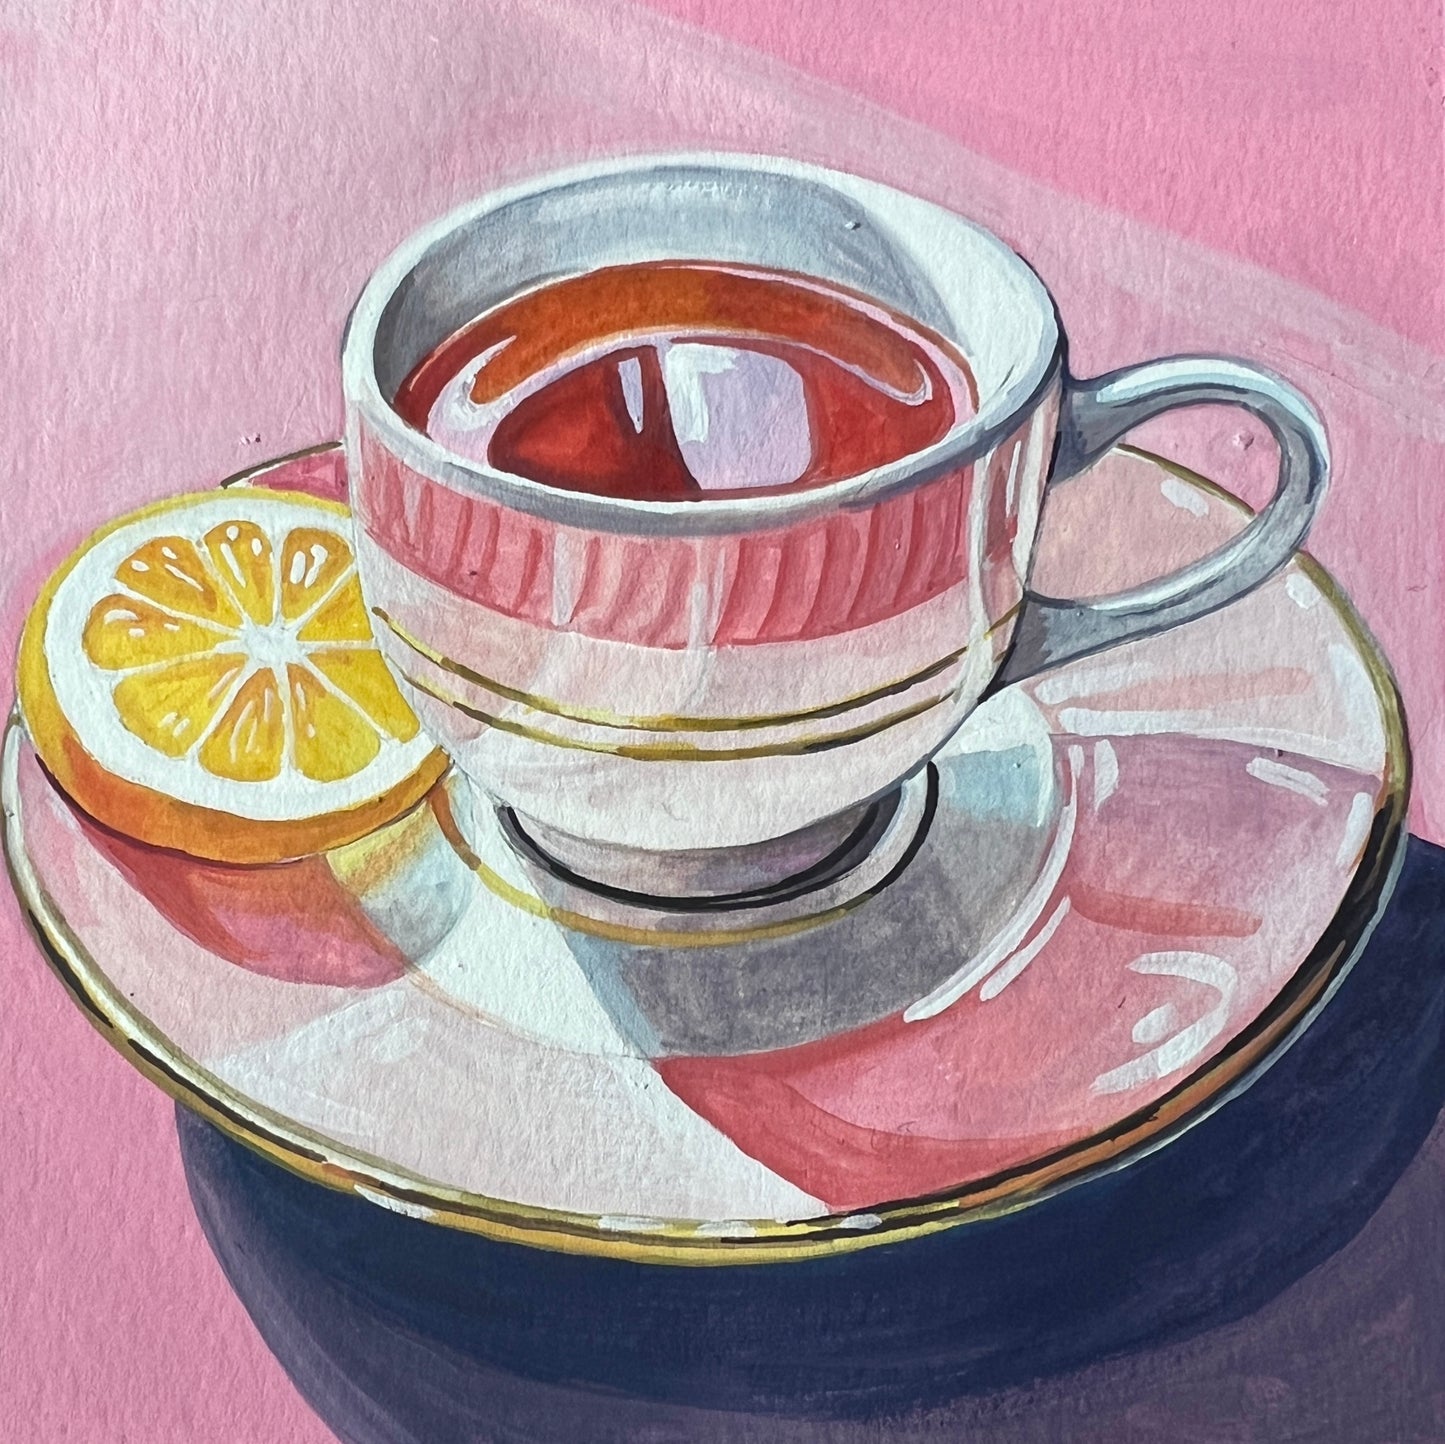 Tea with Lemon on Pink